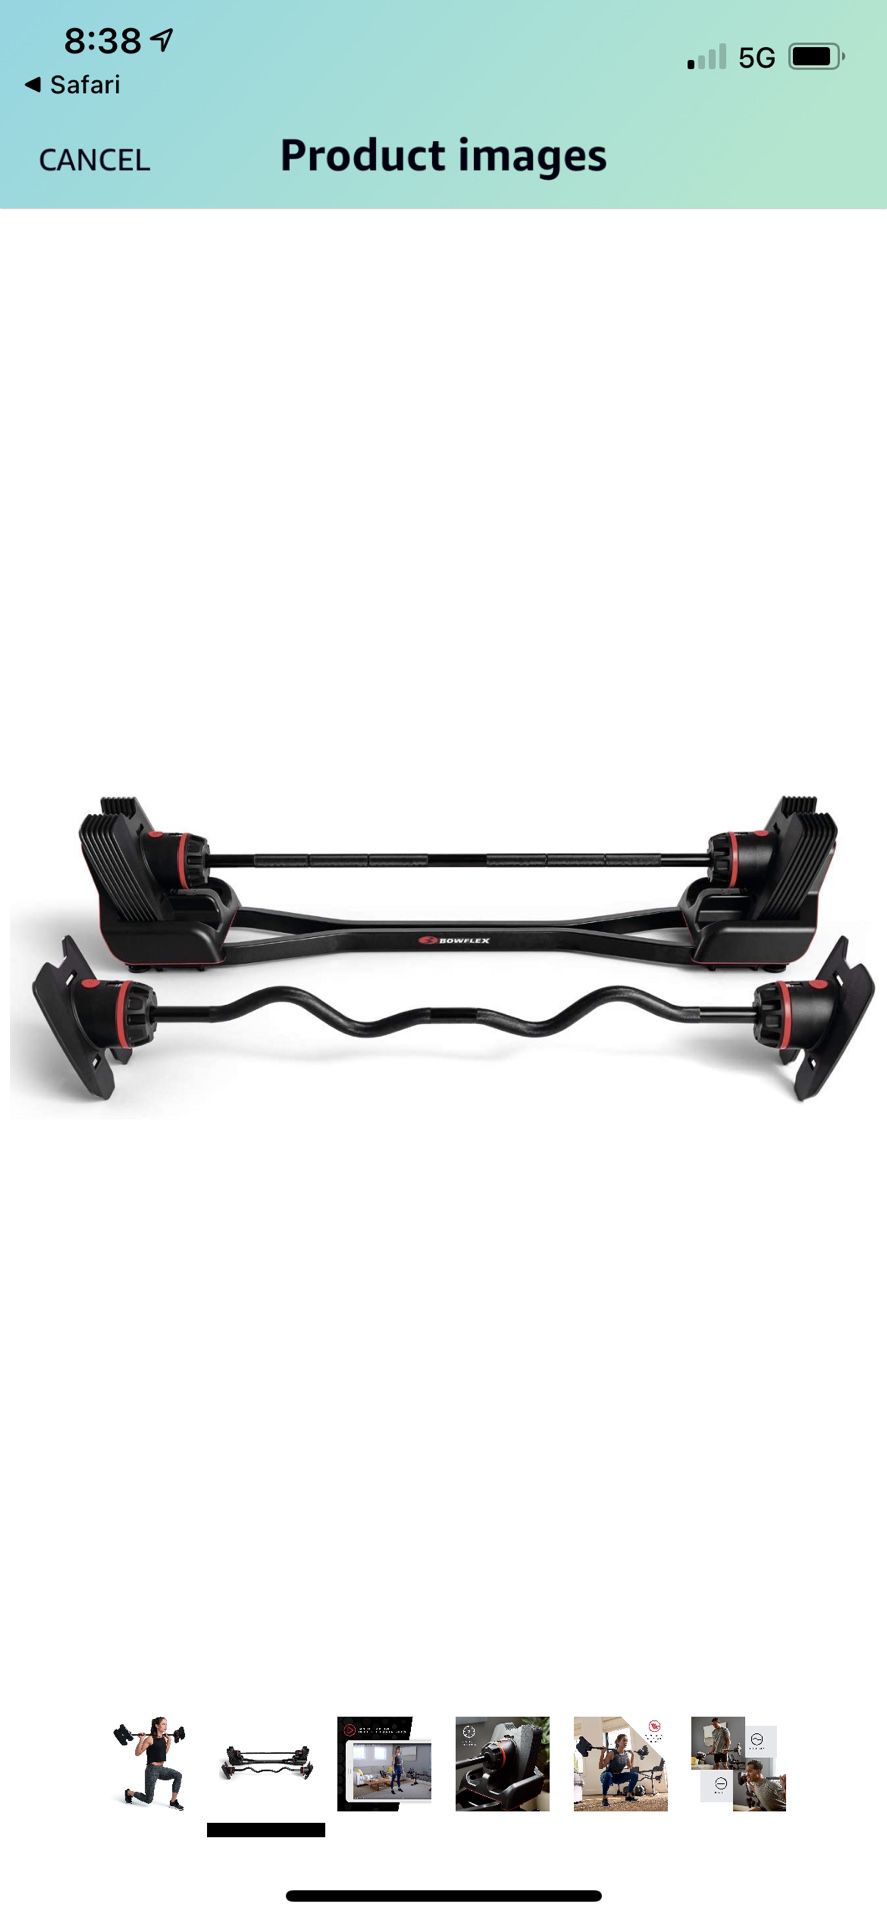 New, Bowflex SelectTech ST2080 Curl Bar, Black. Exp kit for 40 lb available